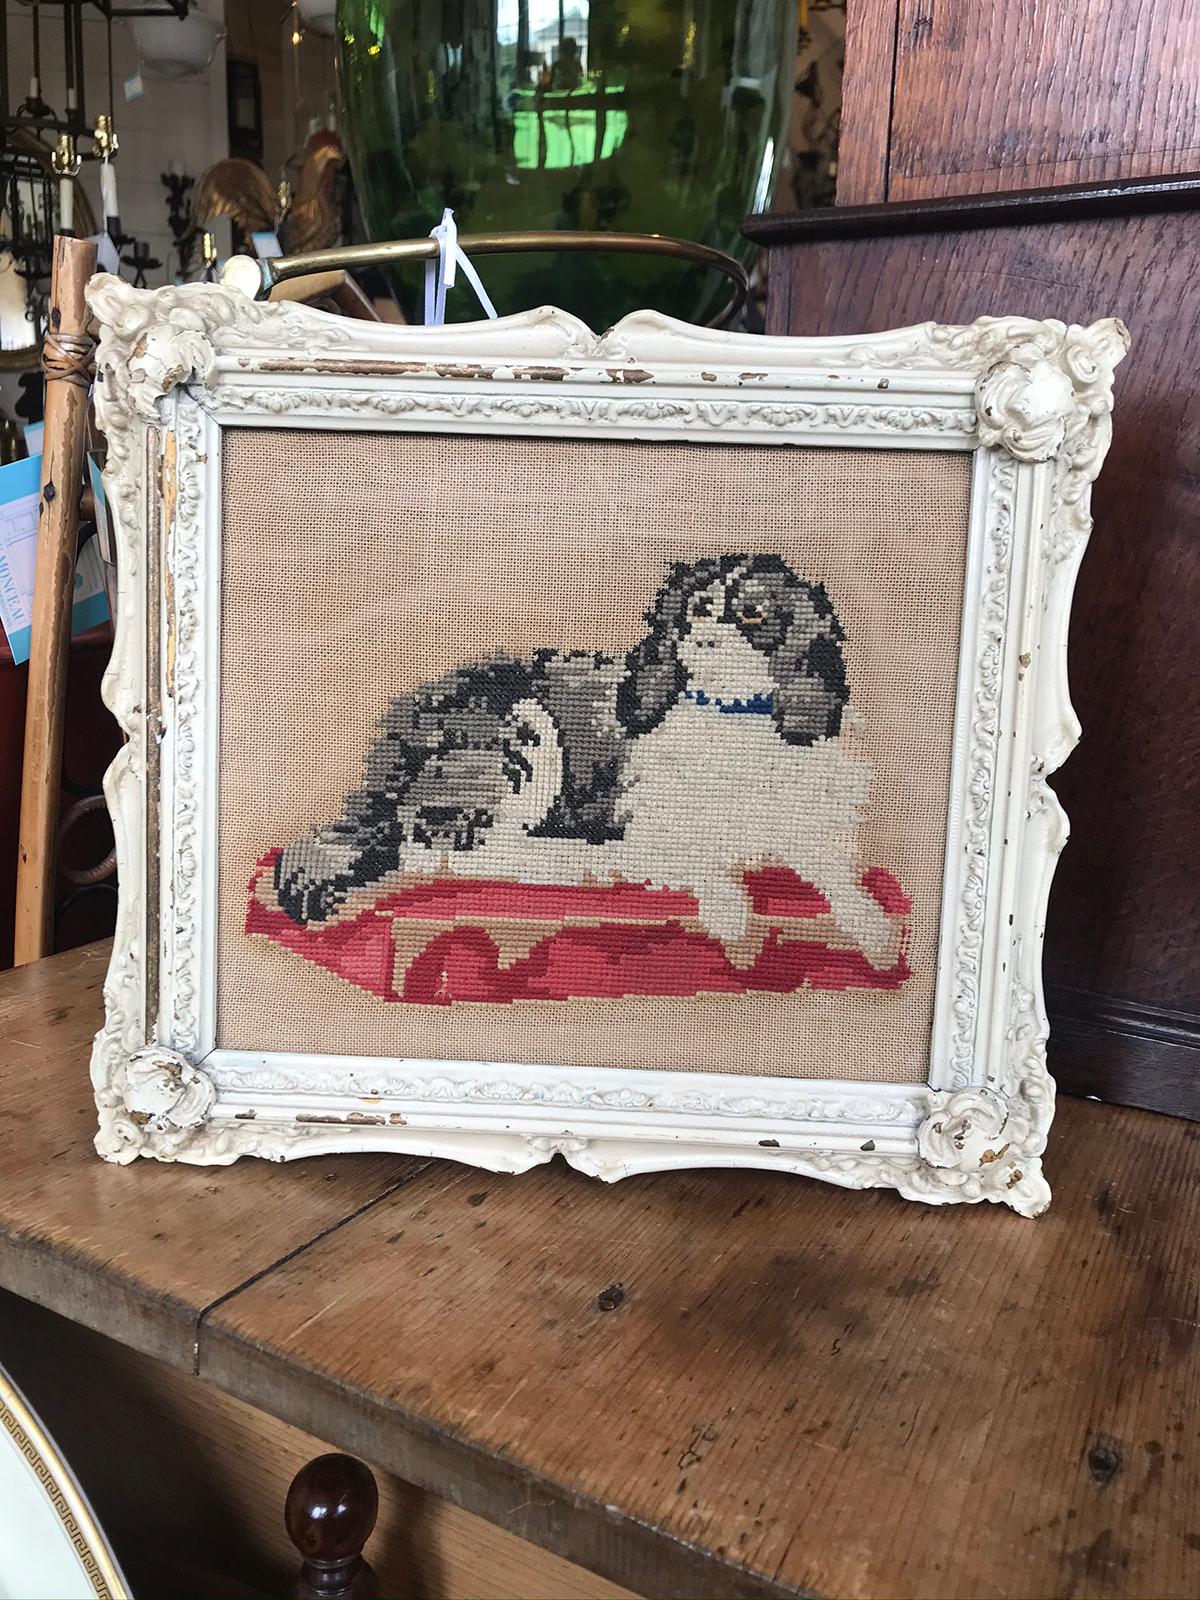 19th century framed needlework of King Charles spaniel dog.